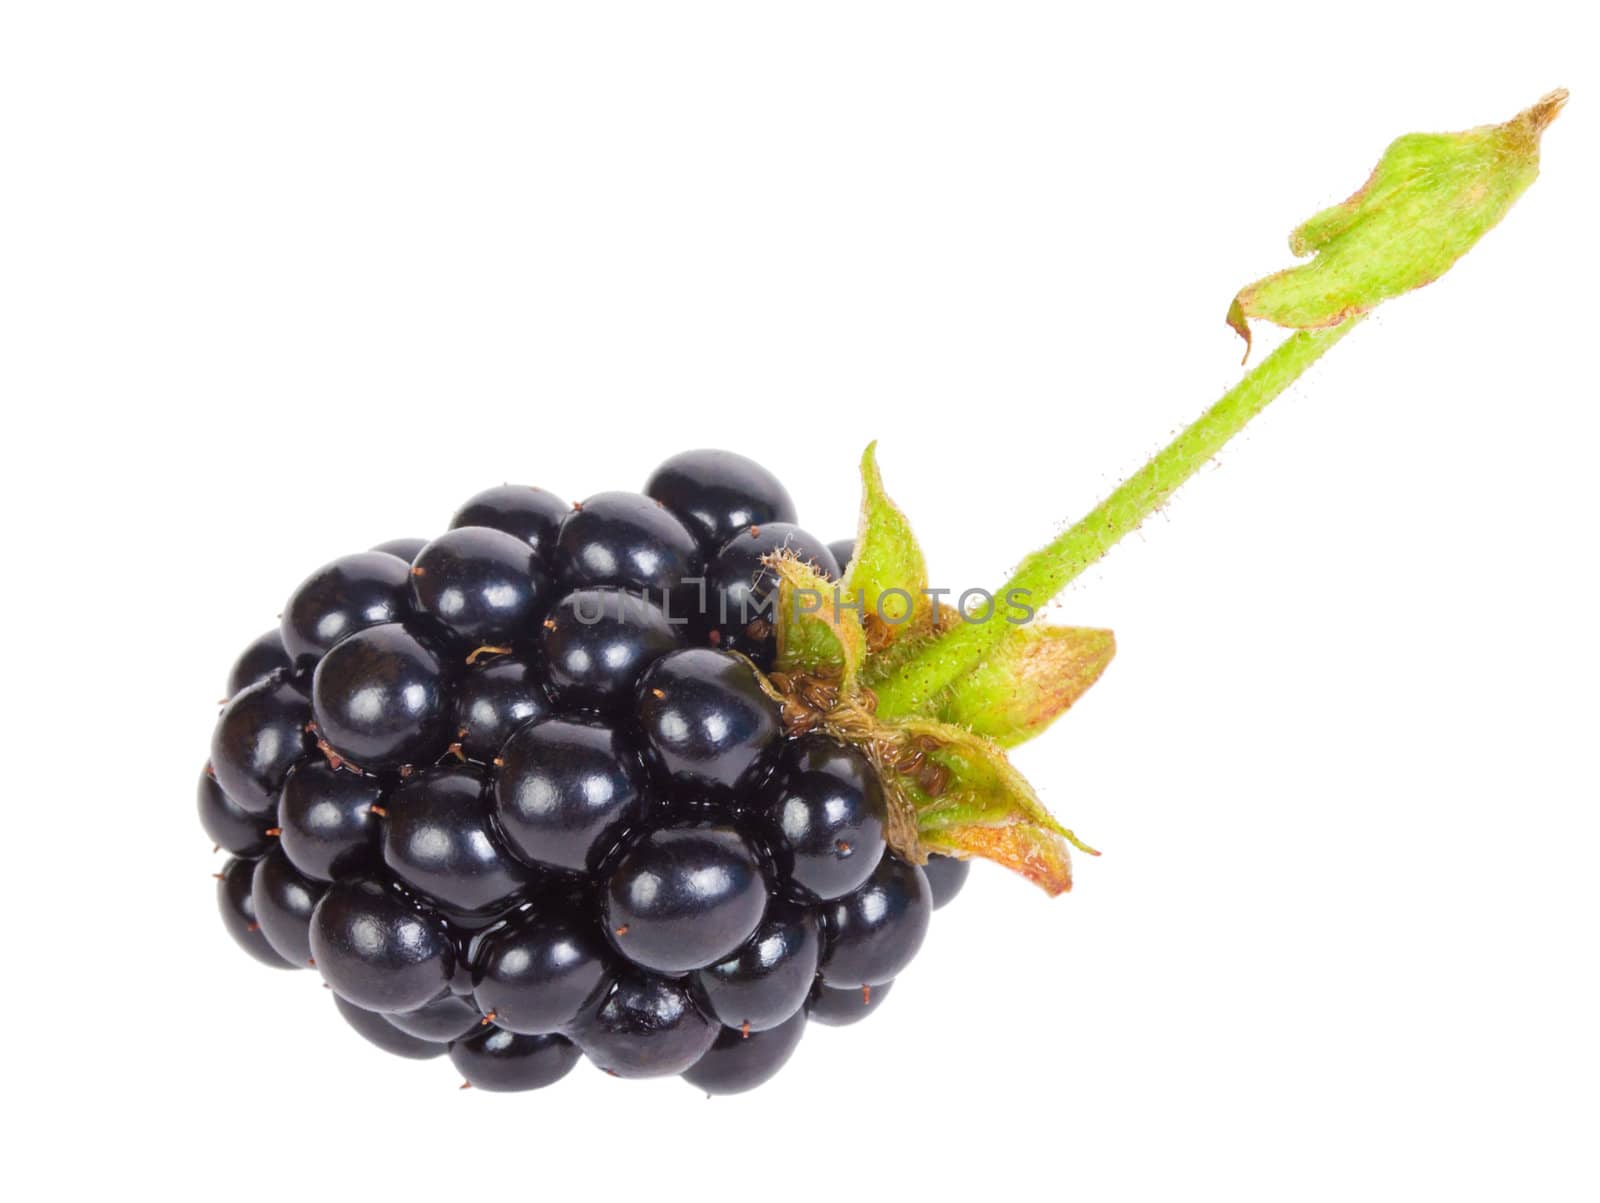 one blackberry  by Alekcey